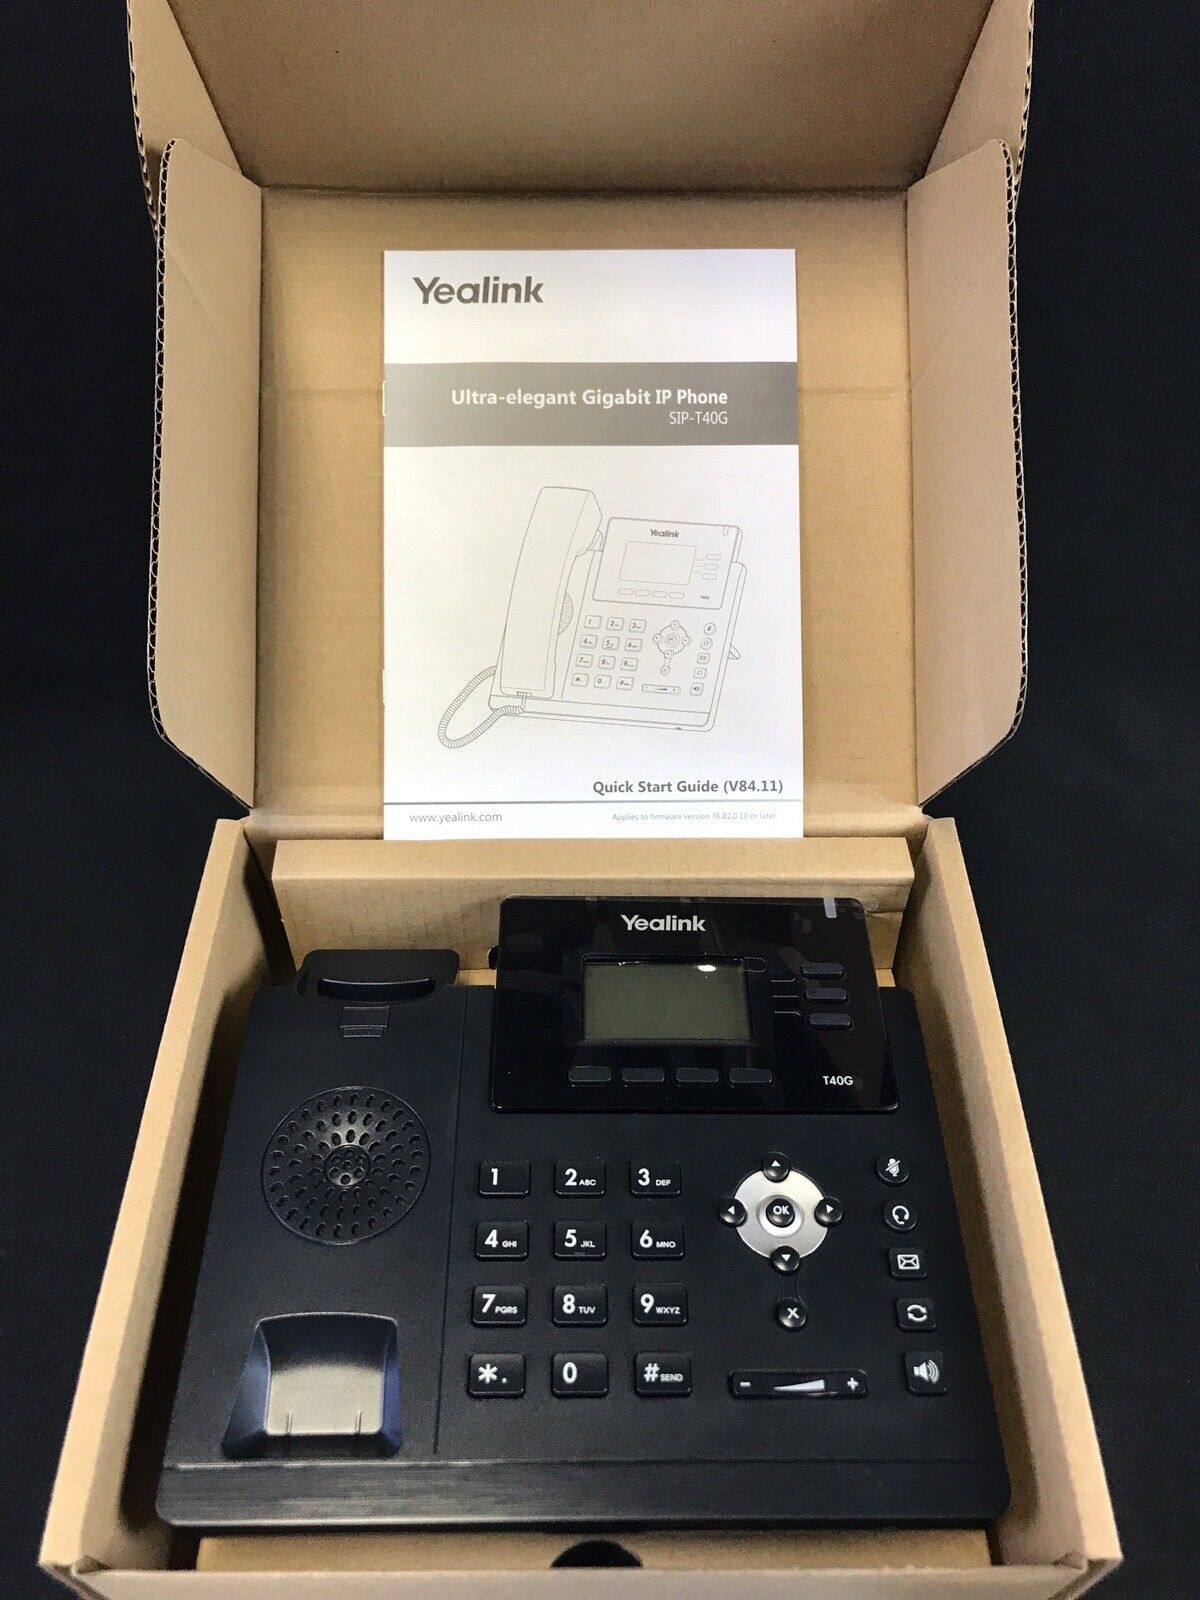 Yealink Ultra-Elegant Gigabit IP Business Desktop Media SIP-T40G IP Phone